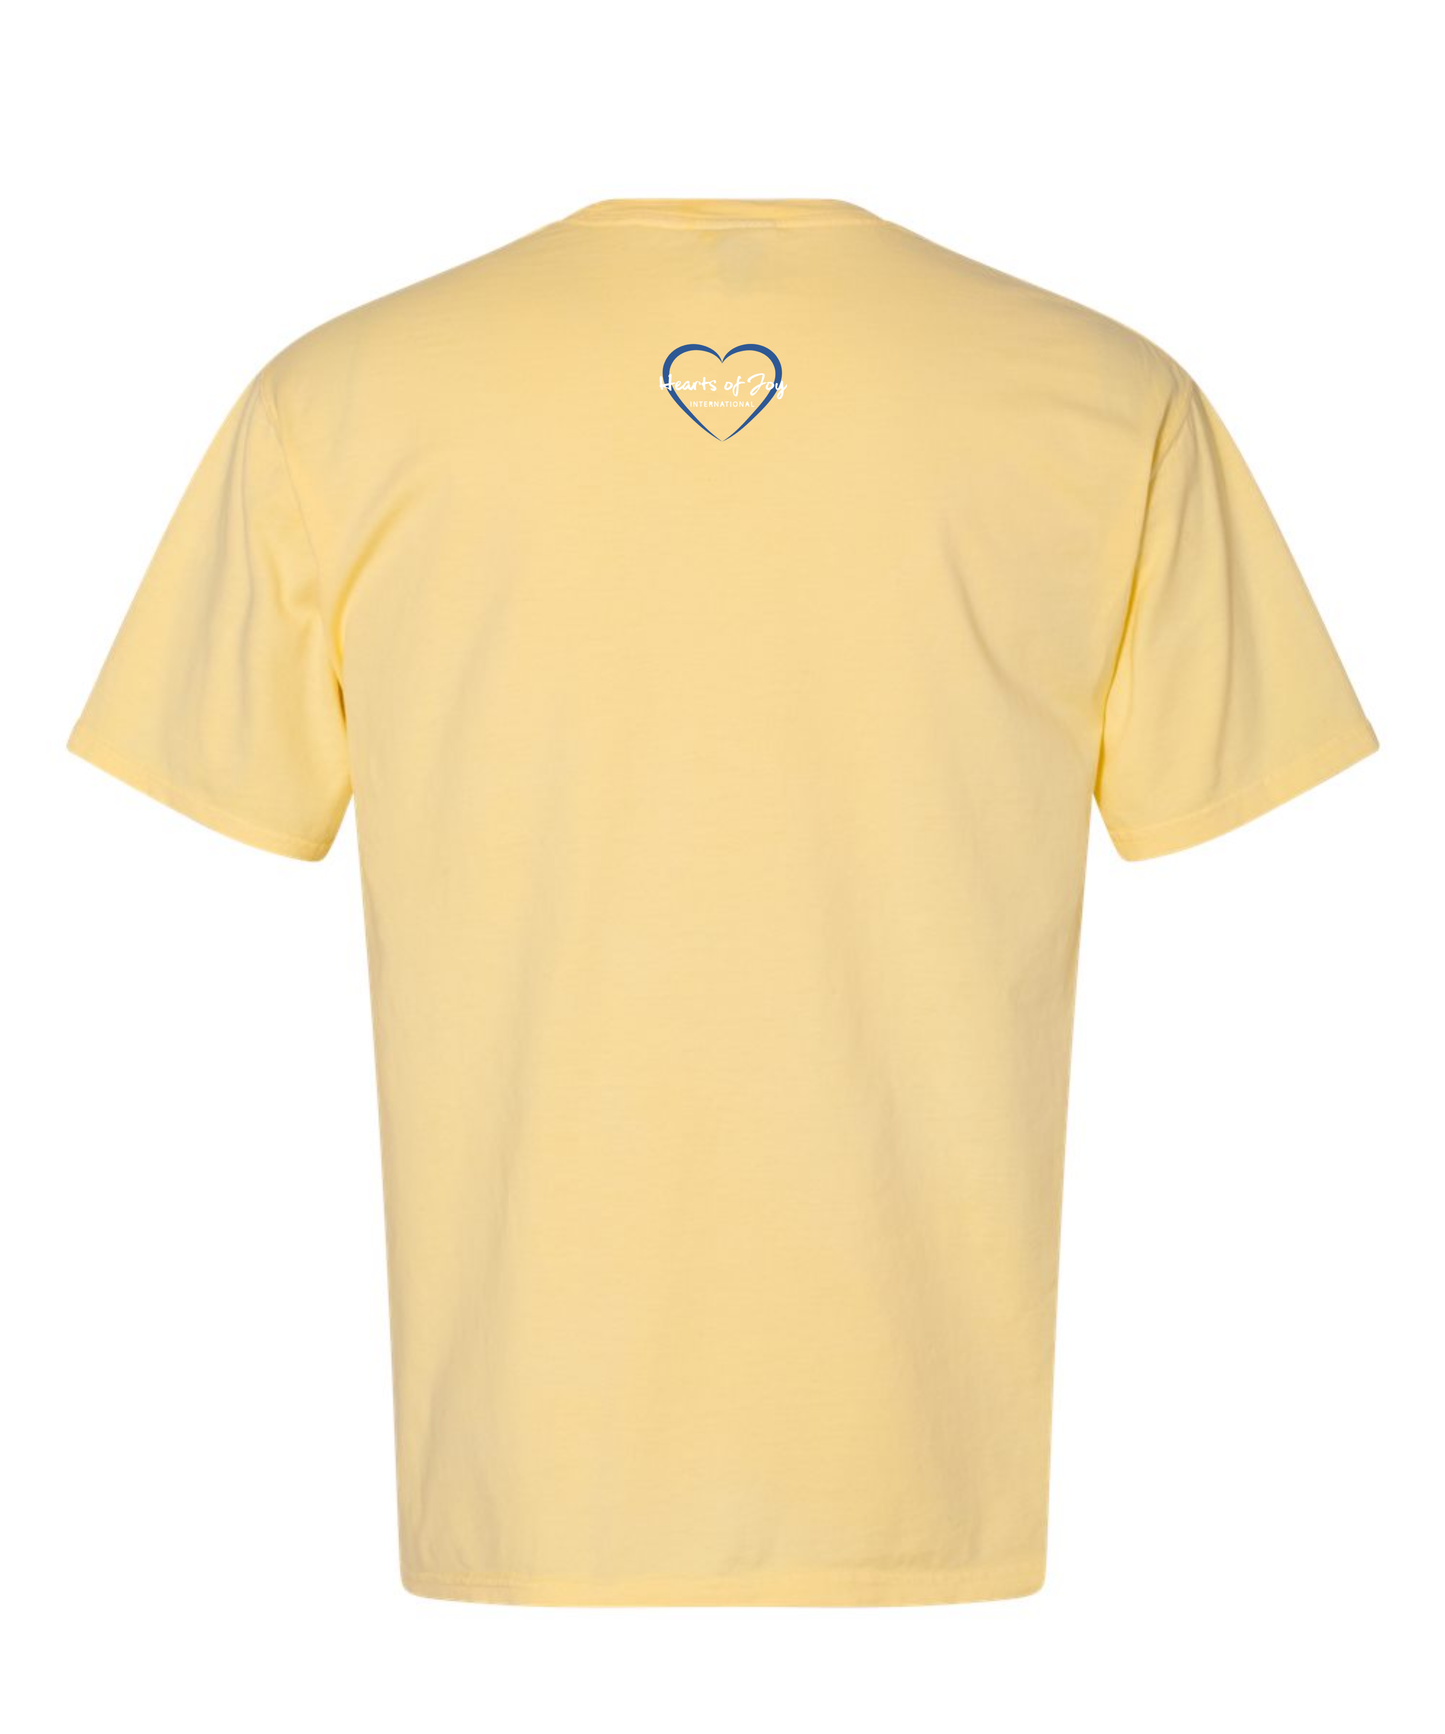 Hearts of Joy International Pocket T-Shirt/ Yellow